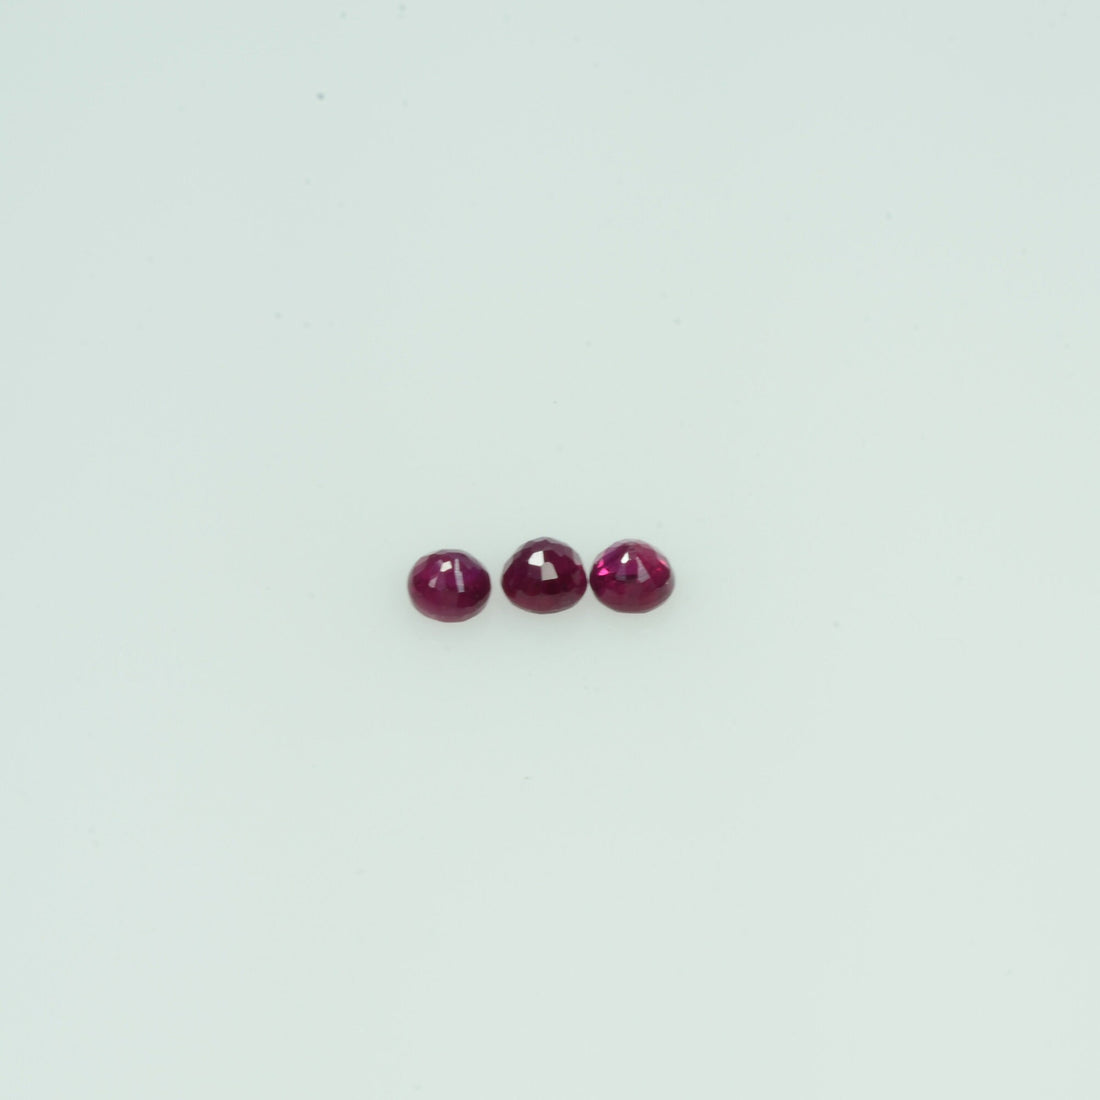 1.2-2.5 mm Natural Ruby Loose Gemstone Round Cut